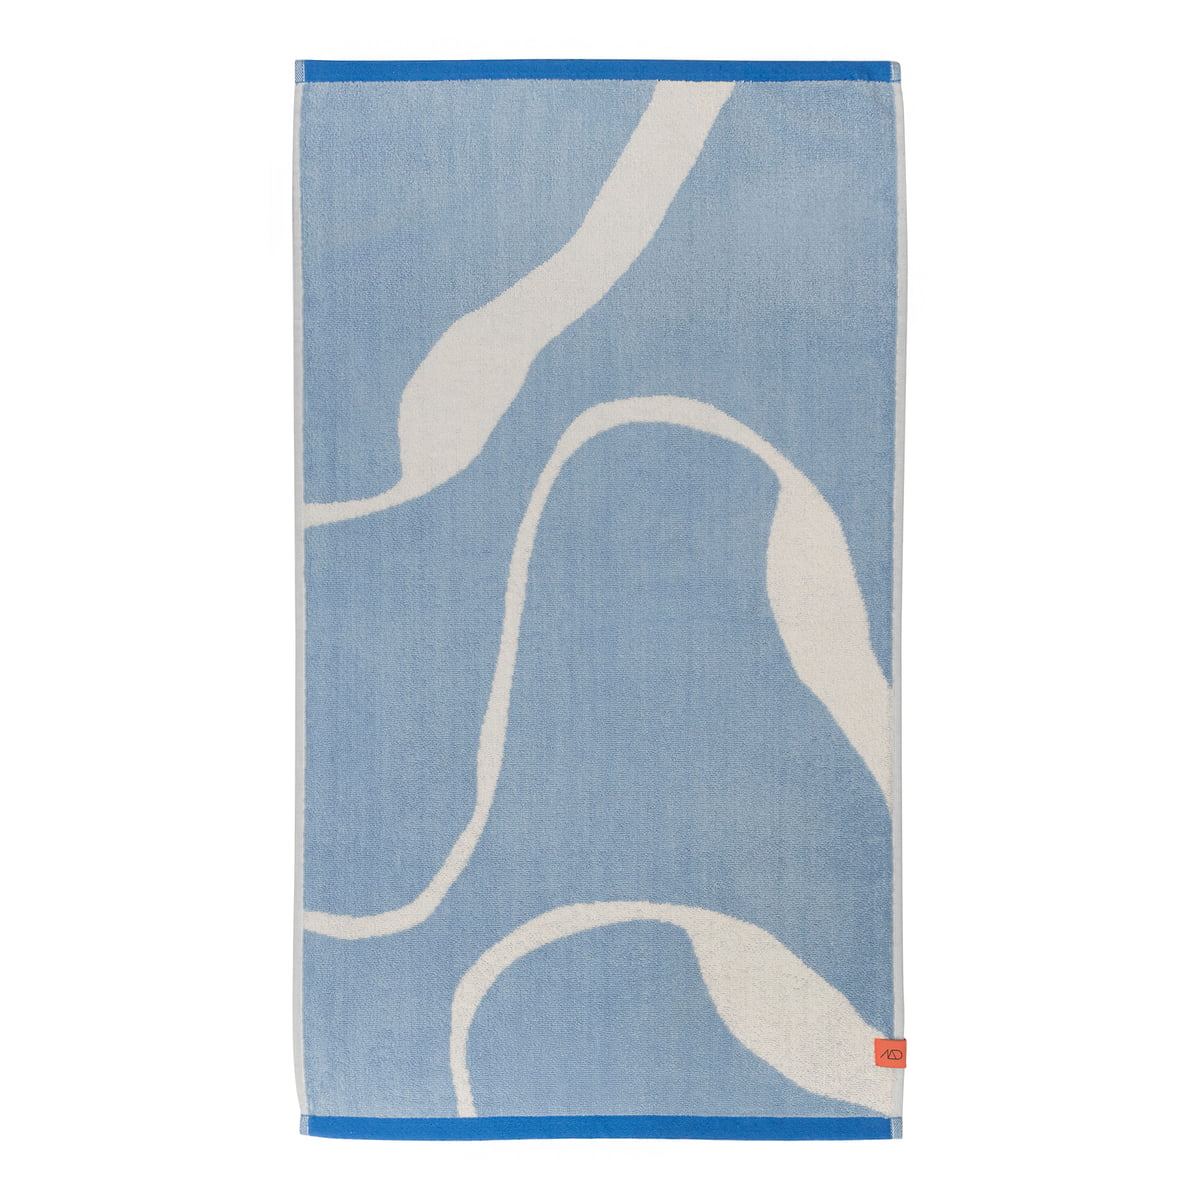 mette ditmer - nova arte serviette de bain, 70 x 133 cm, bleu clair / blanc cassé